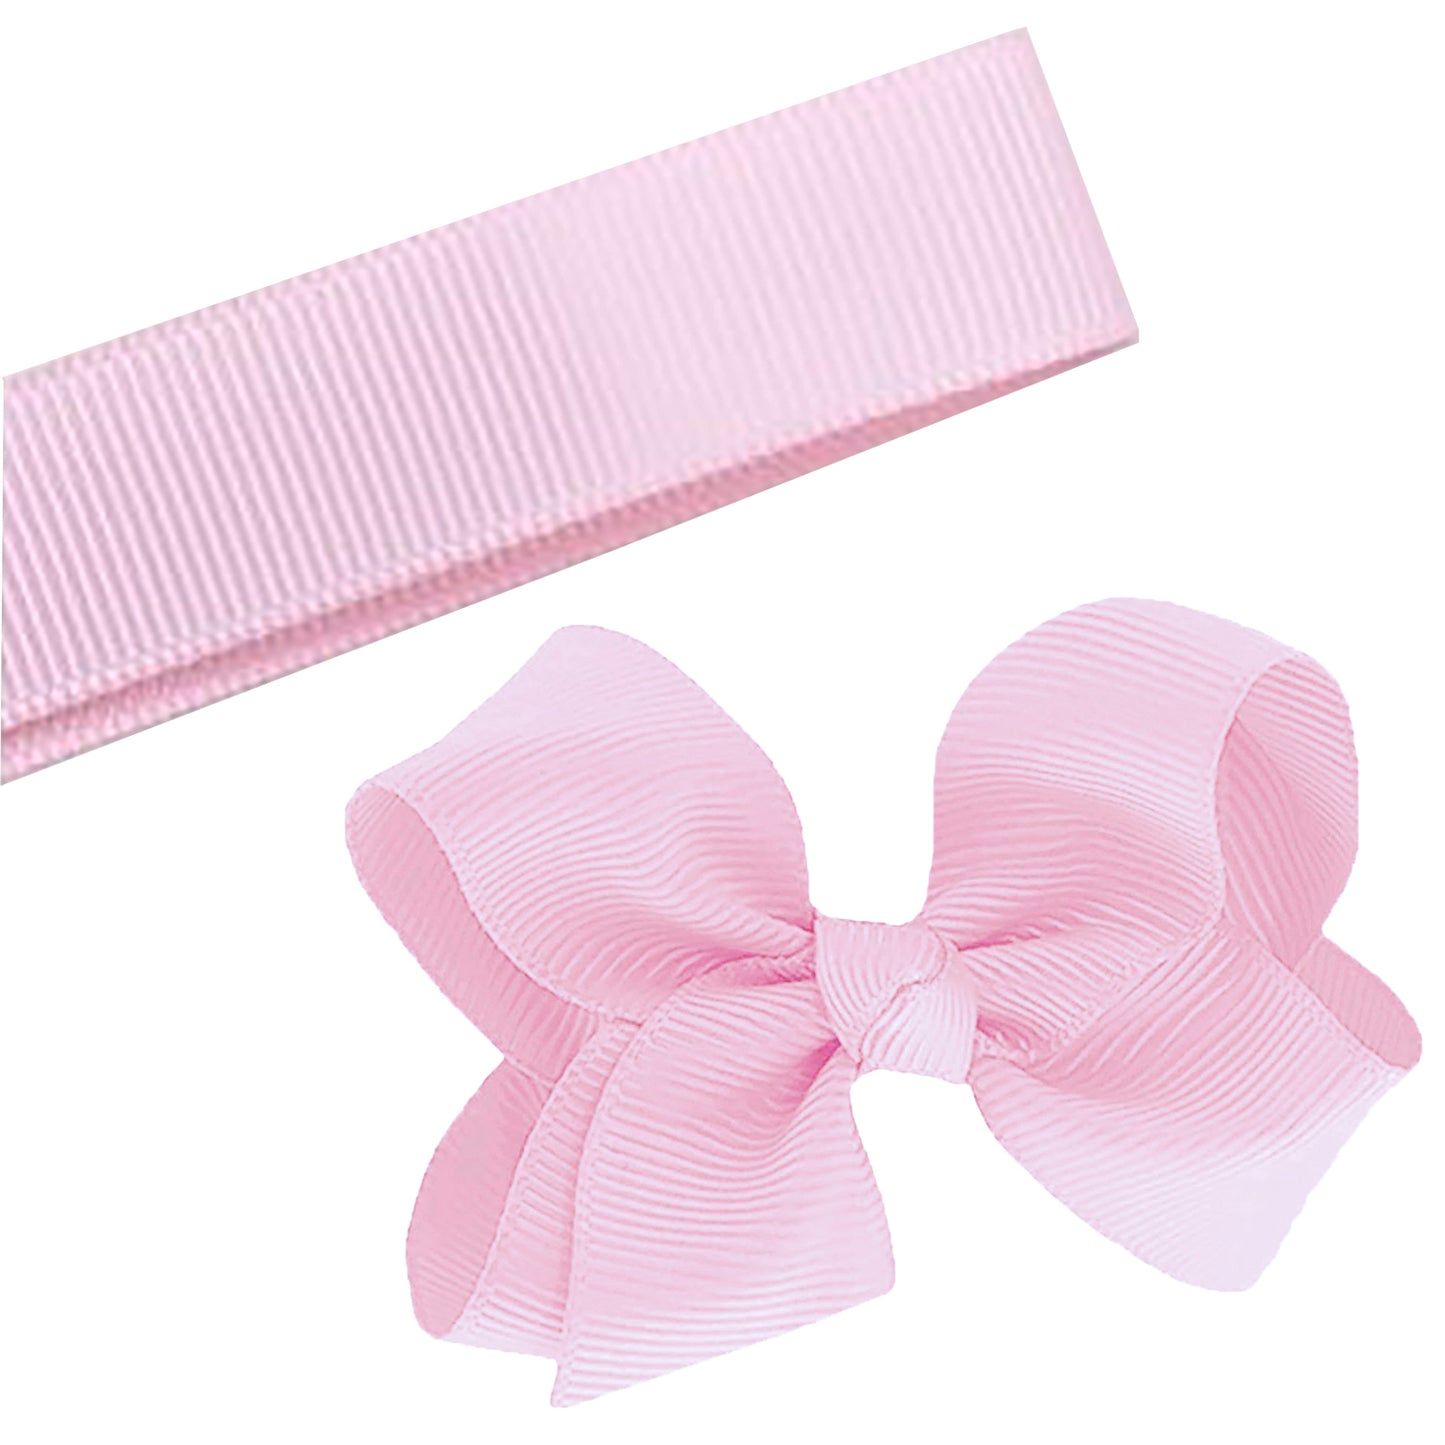 5 Yards Solid Light Pink Grosgrain Ribbon Yardage DIY Crafts Bows Décor USA